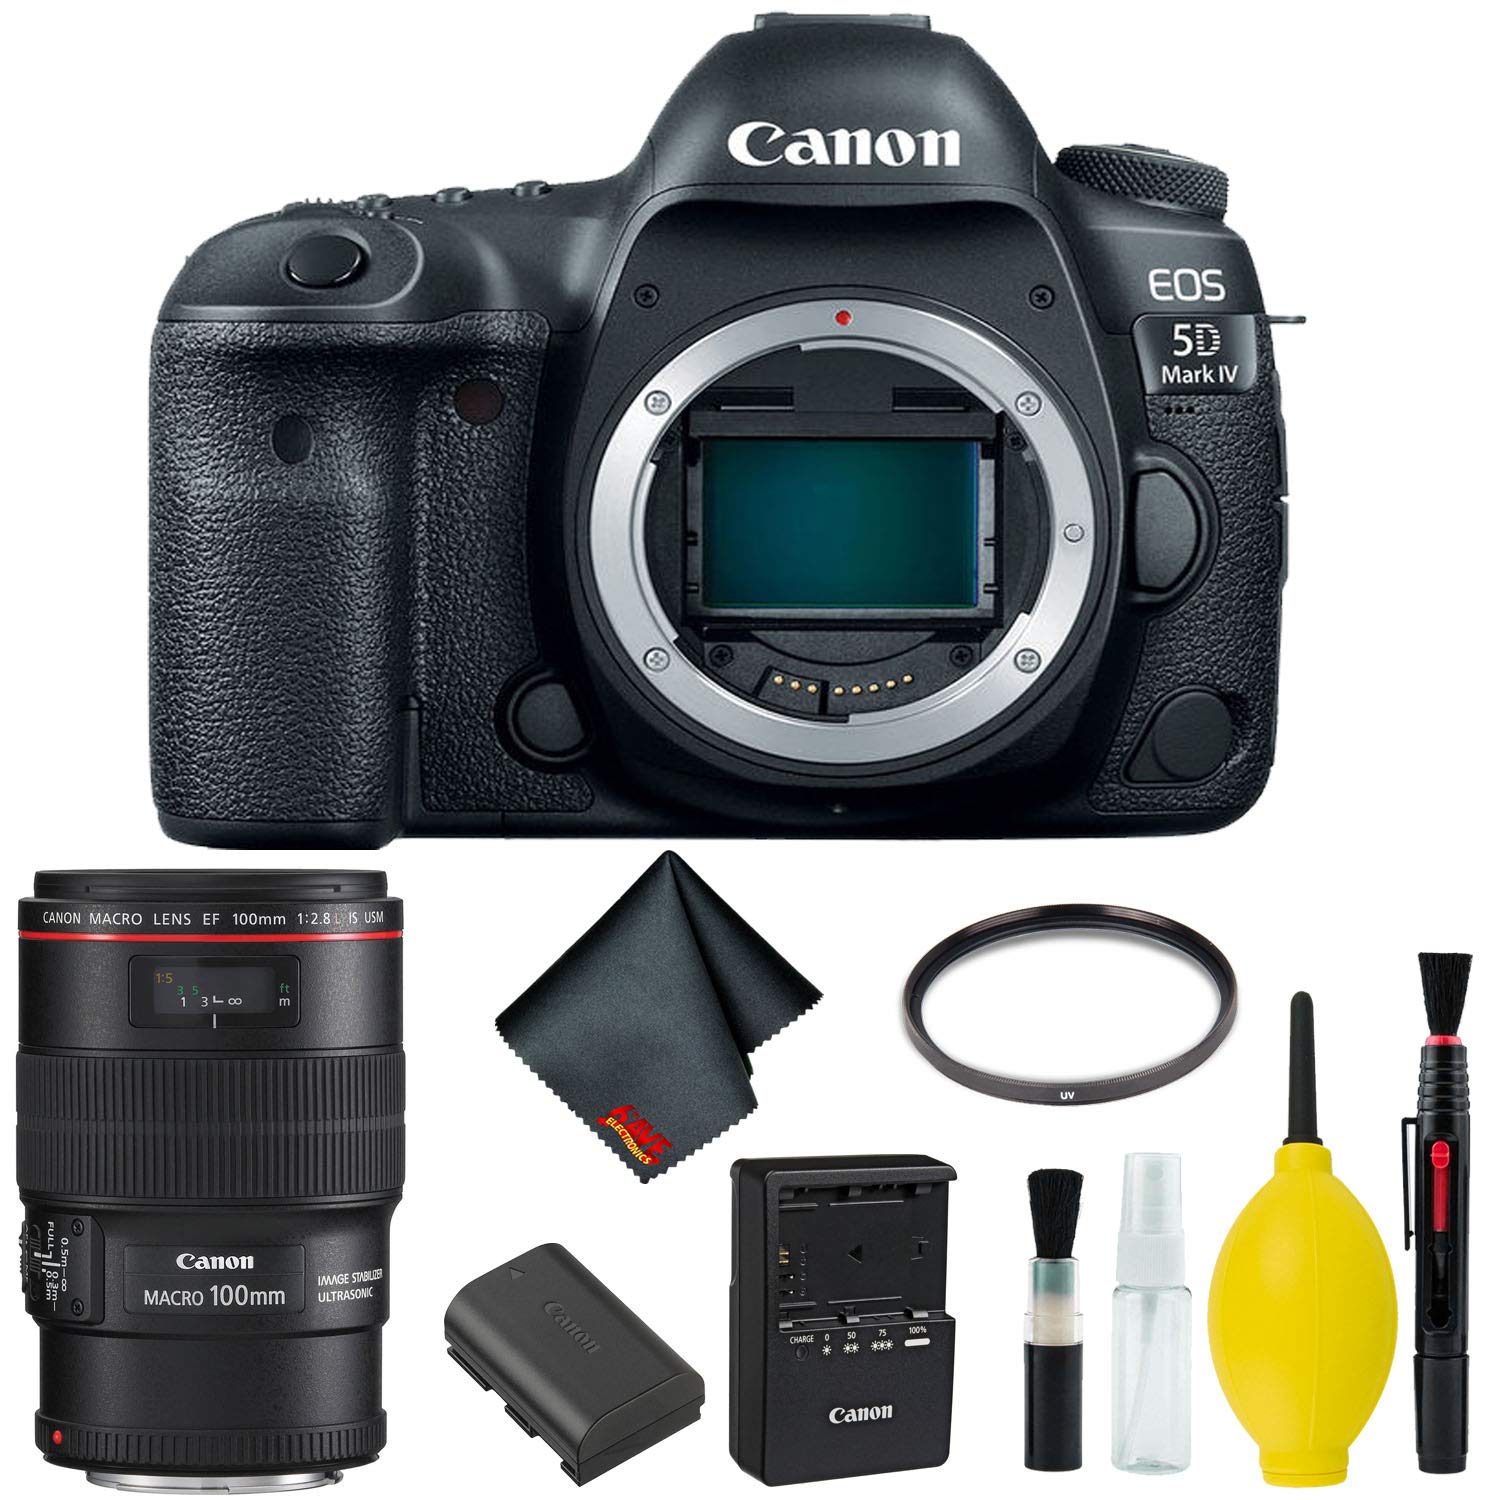 Canon EOS 5D Mark IV DSLR Camera Body Only Basic Kit (International Model) w/Canon EF 100mm f/2.8L Macro is USM Lens